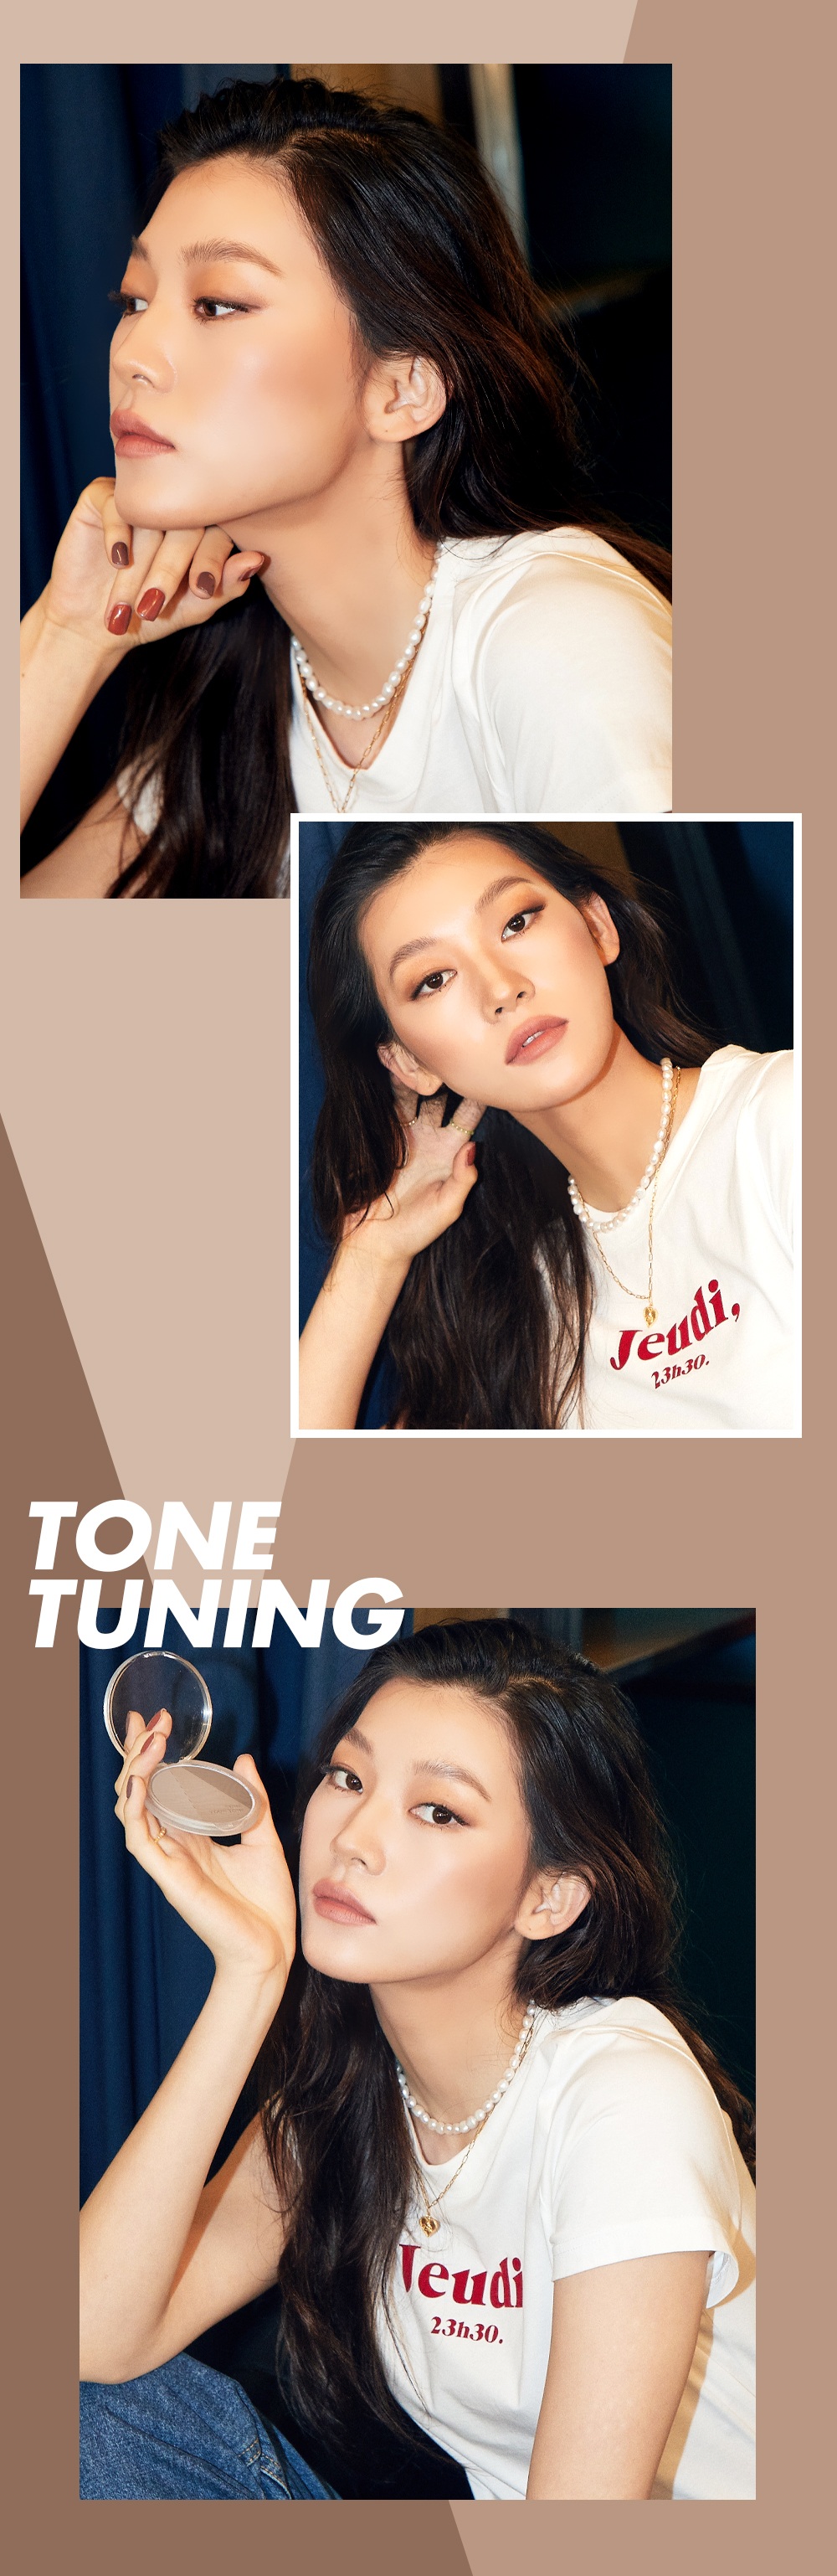 Holika Holika Tone Tuning Shading korean cosmetic makeup product online shop malaysia China indonesia2